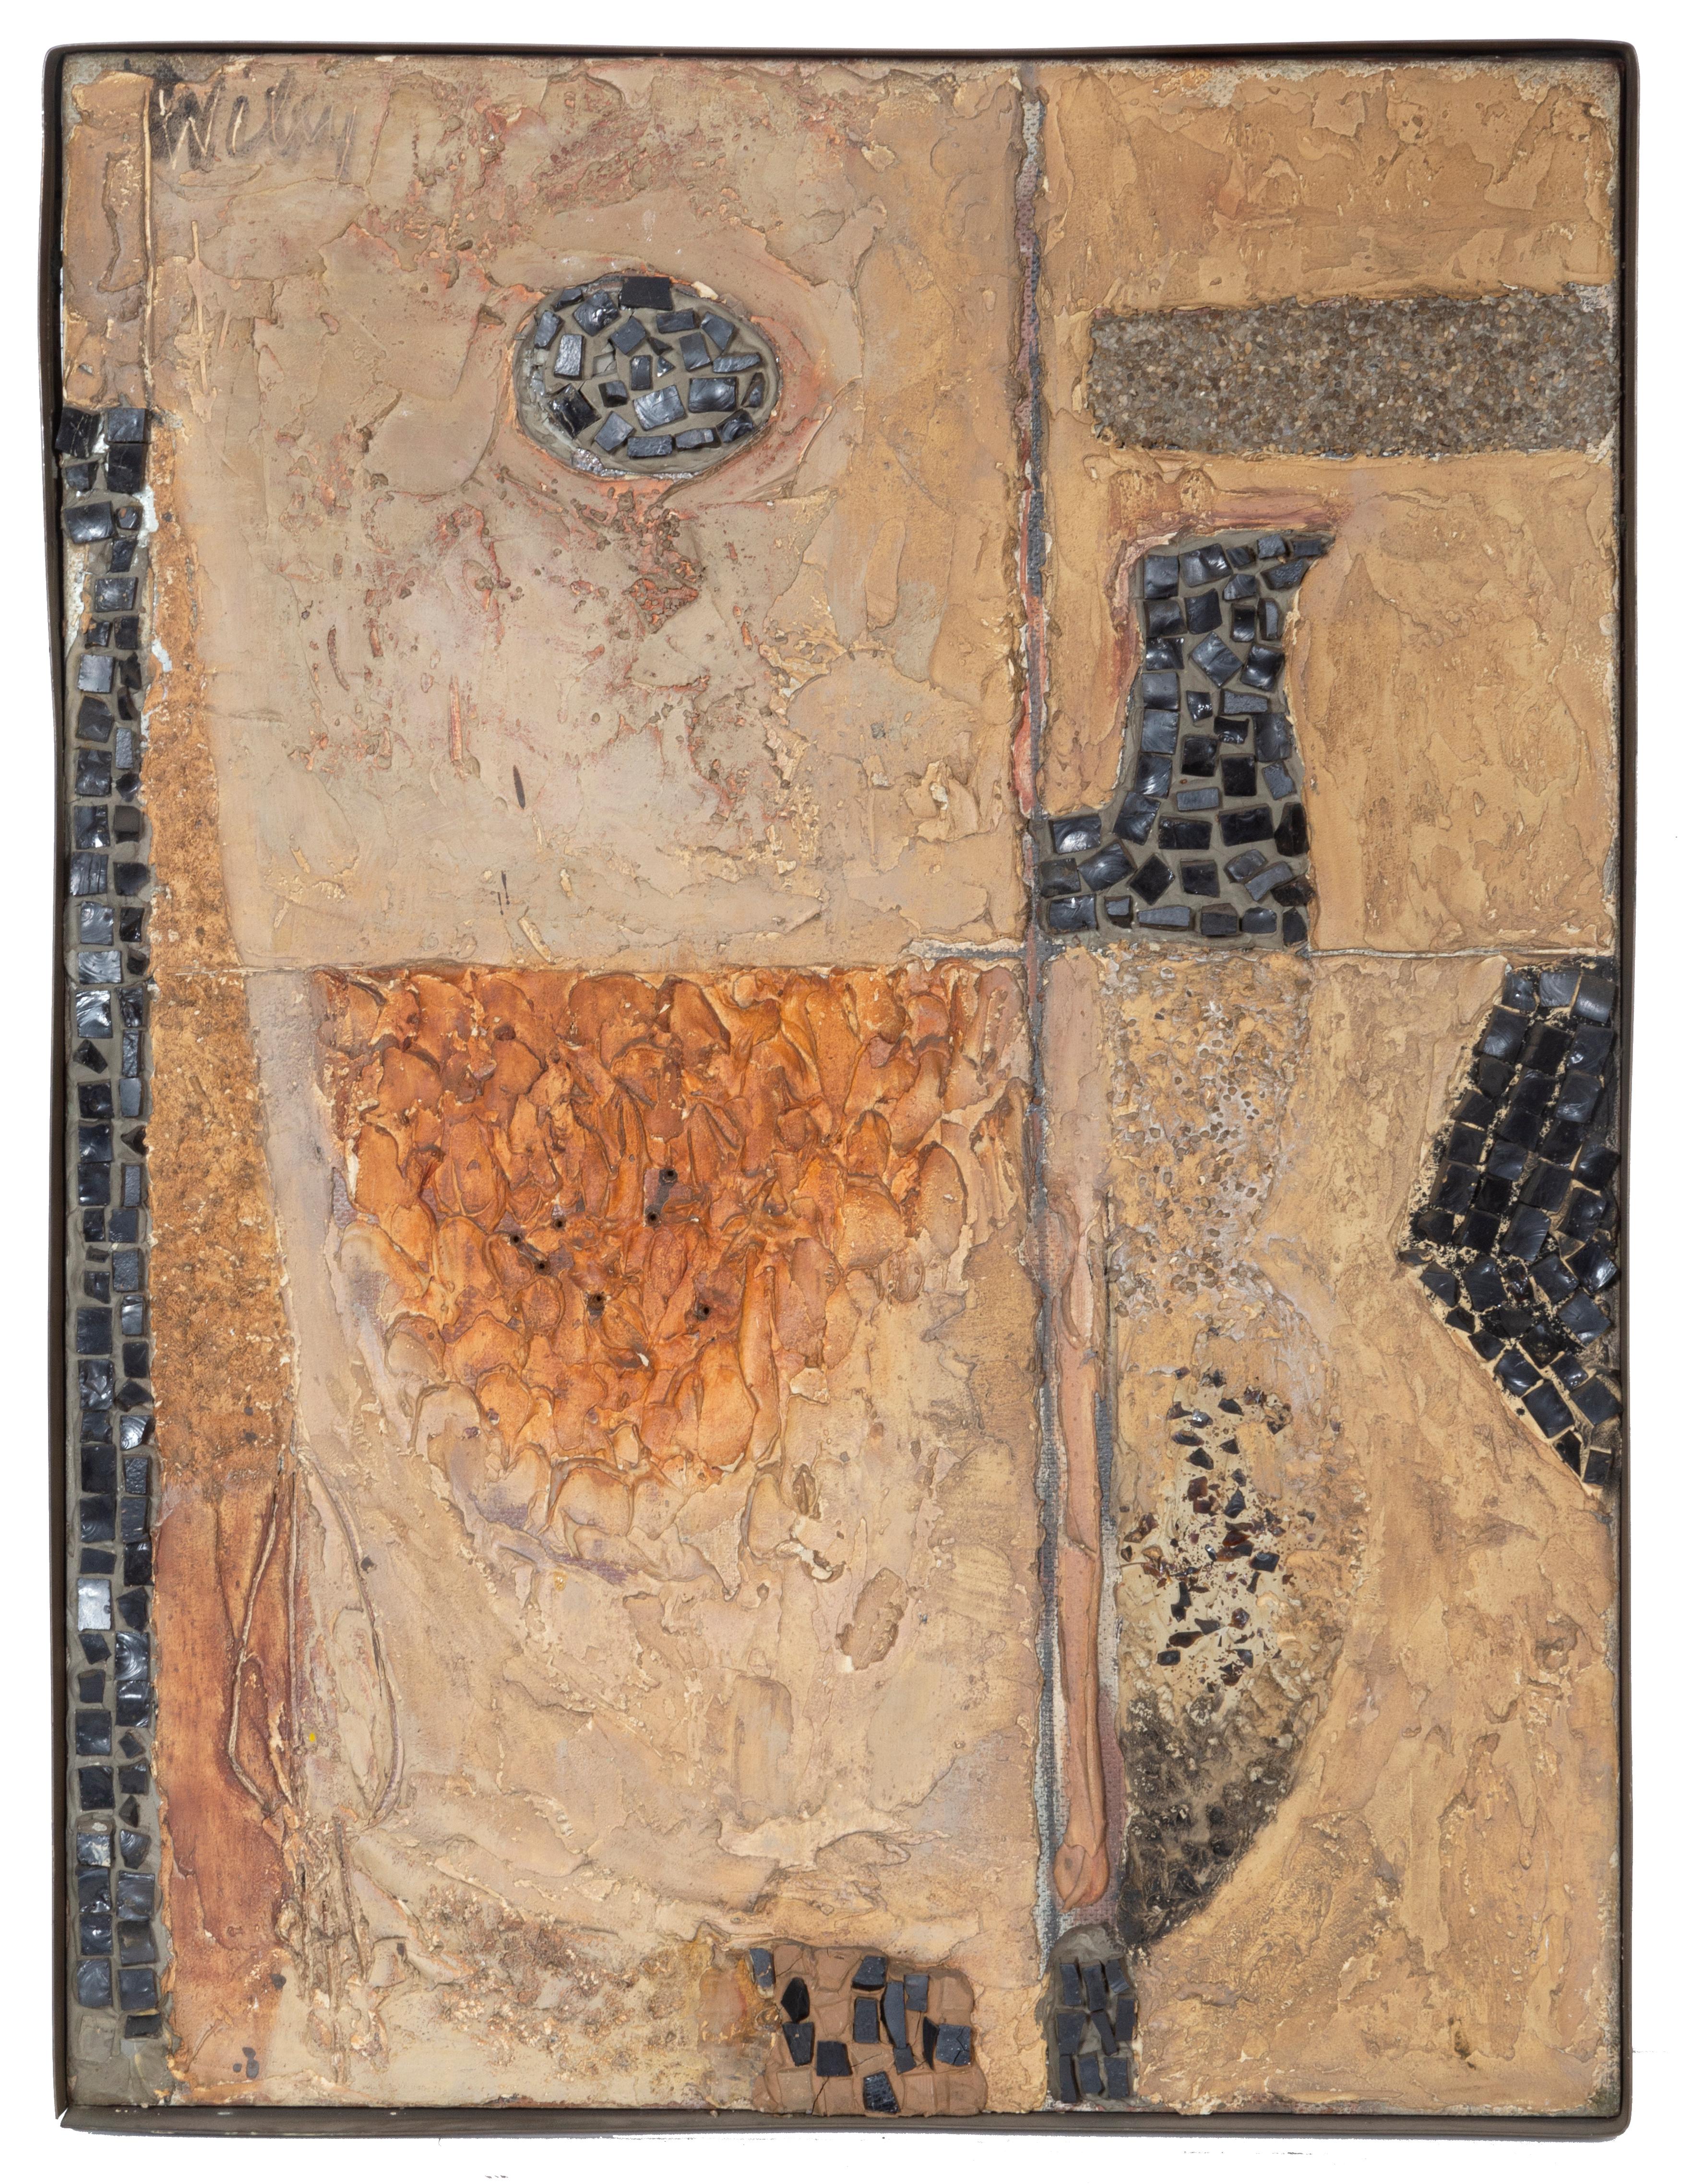 Künstler: Hugh Wiley (1922-2013)
Titel: Mosaikplatte 
Jahr: 1951
Medium: Mixed Media Mosaik auf Leinwand, oben links signiert
Bildgröße: 24 x 17,5 Zoll
Rahmengröße: 24,25 x 18 Zoll